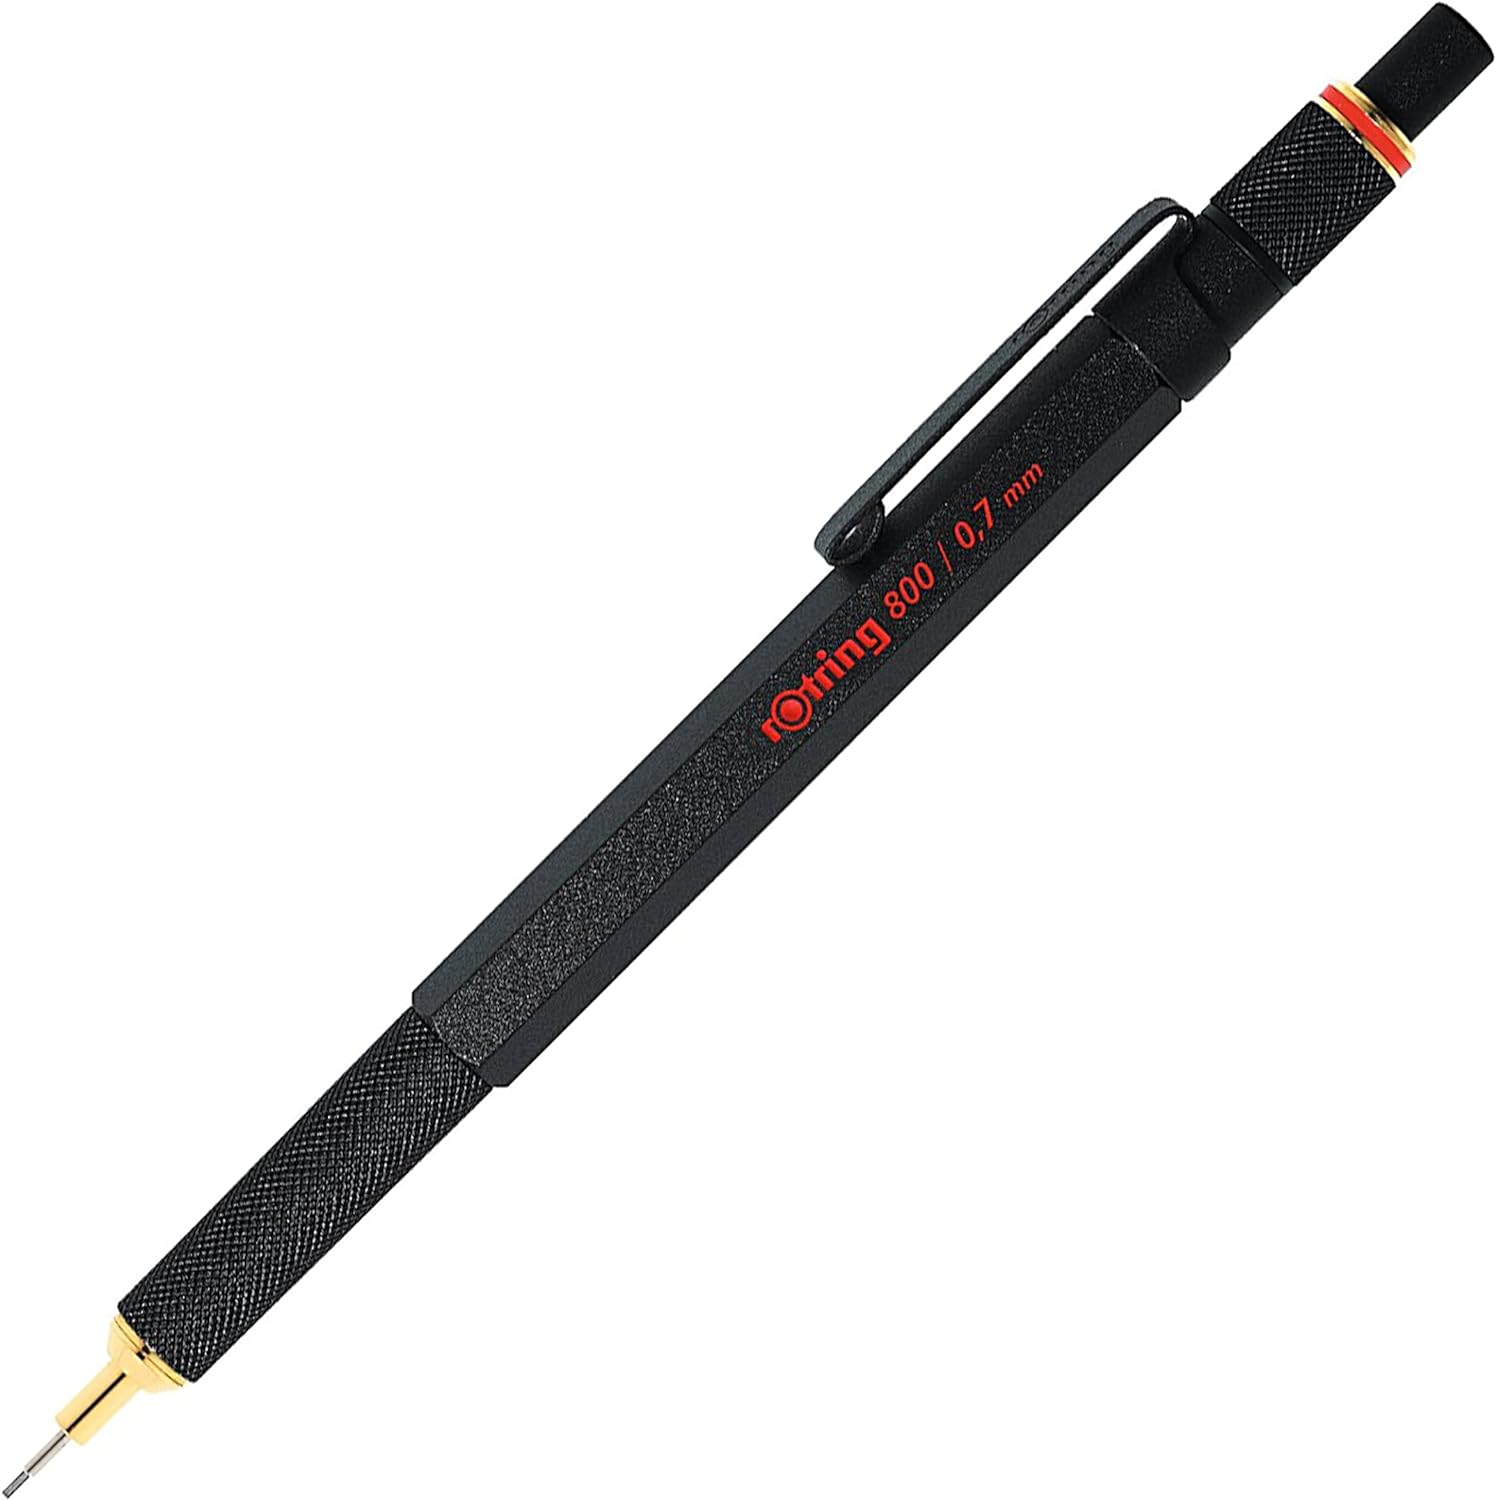 Rotring 800 Mechanical Pencil 0.7Mm Black $36.97